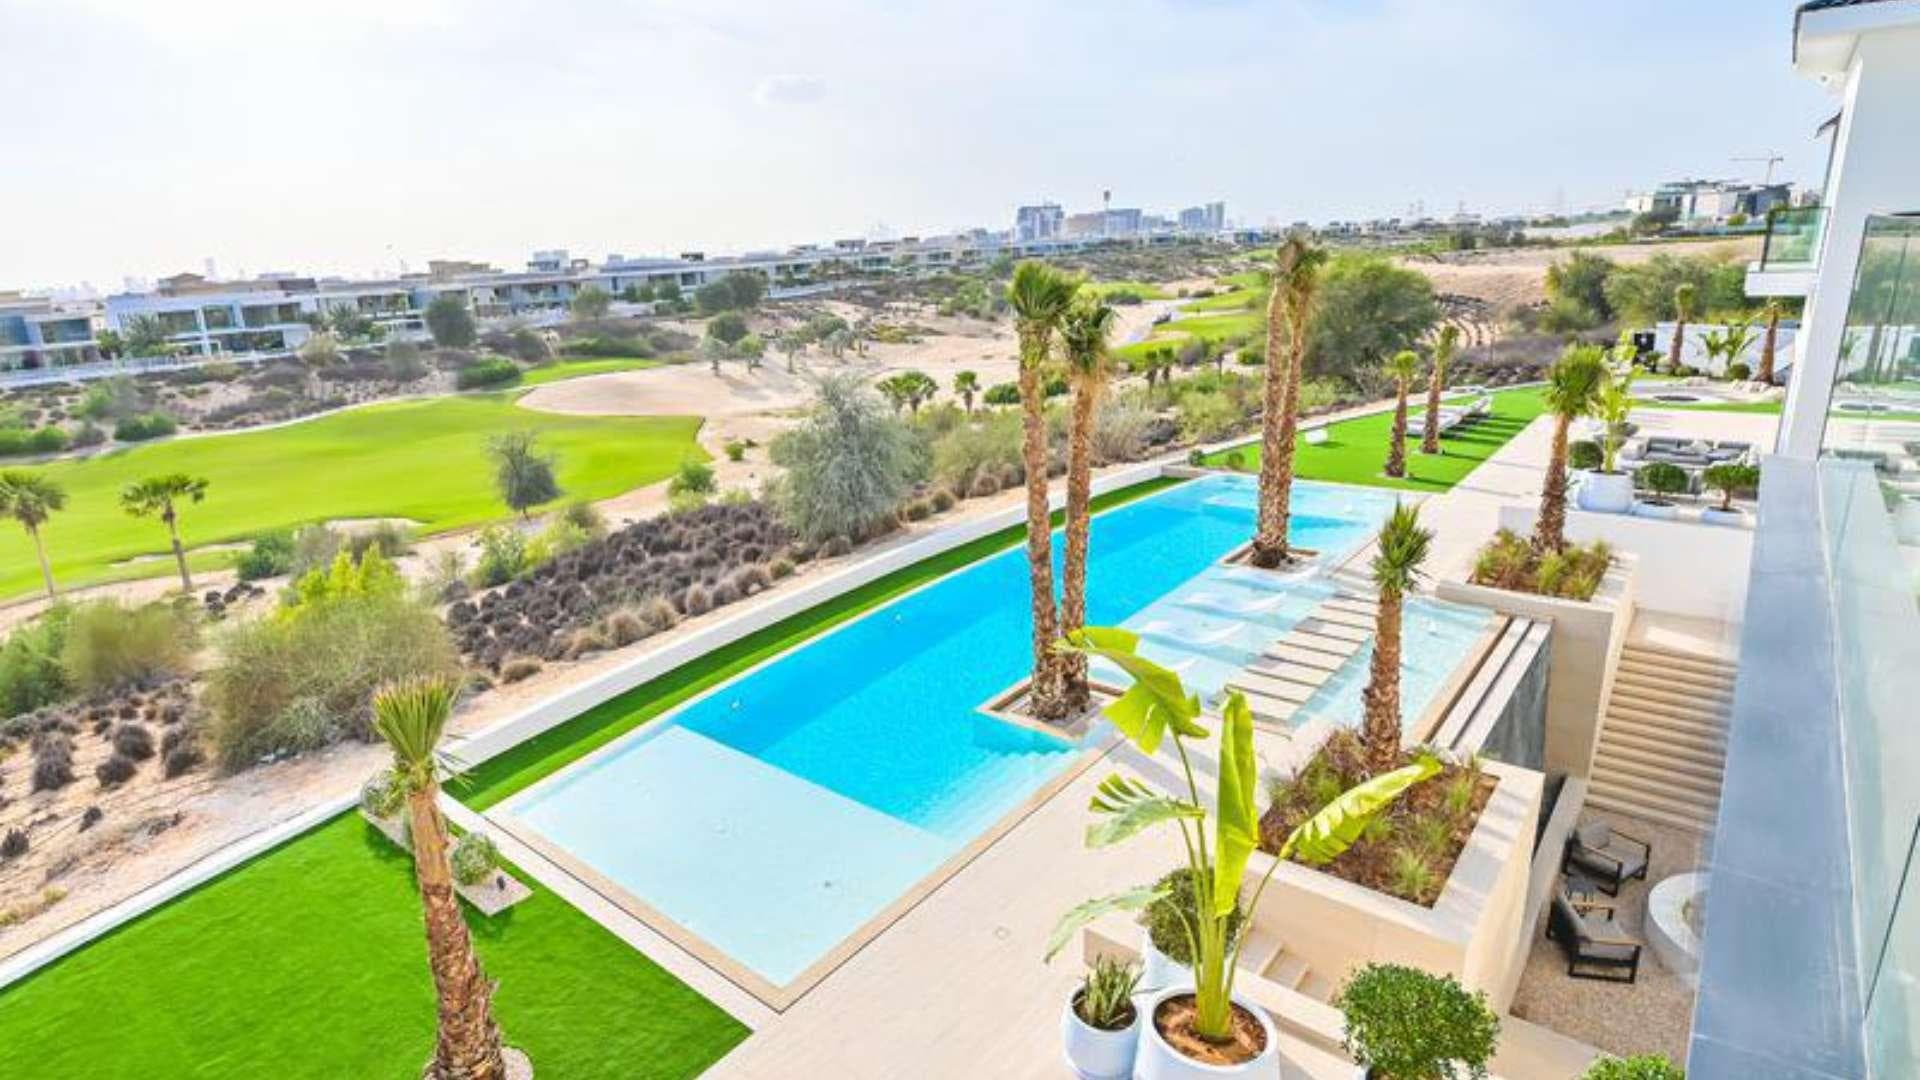 7 Bedroom Villa For Sale Dubai Hills Lp20693 2c5ebef6c3d8fa00.jpg